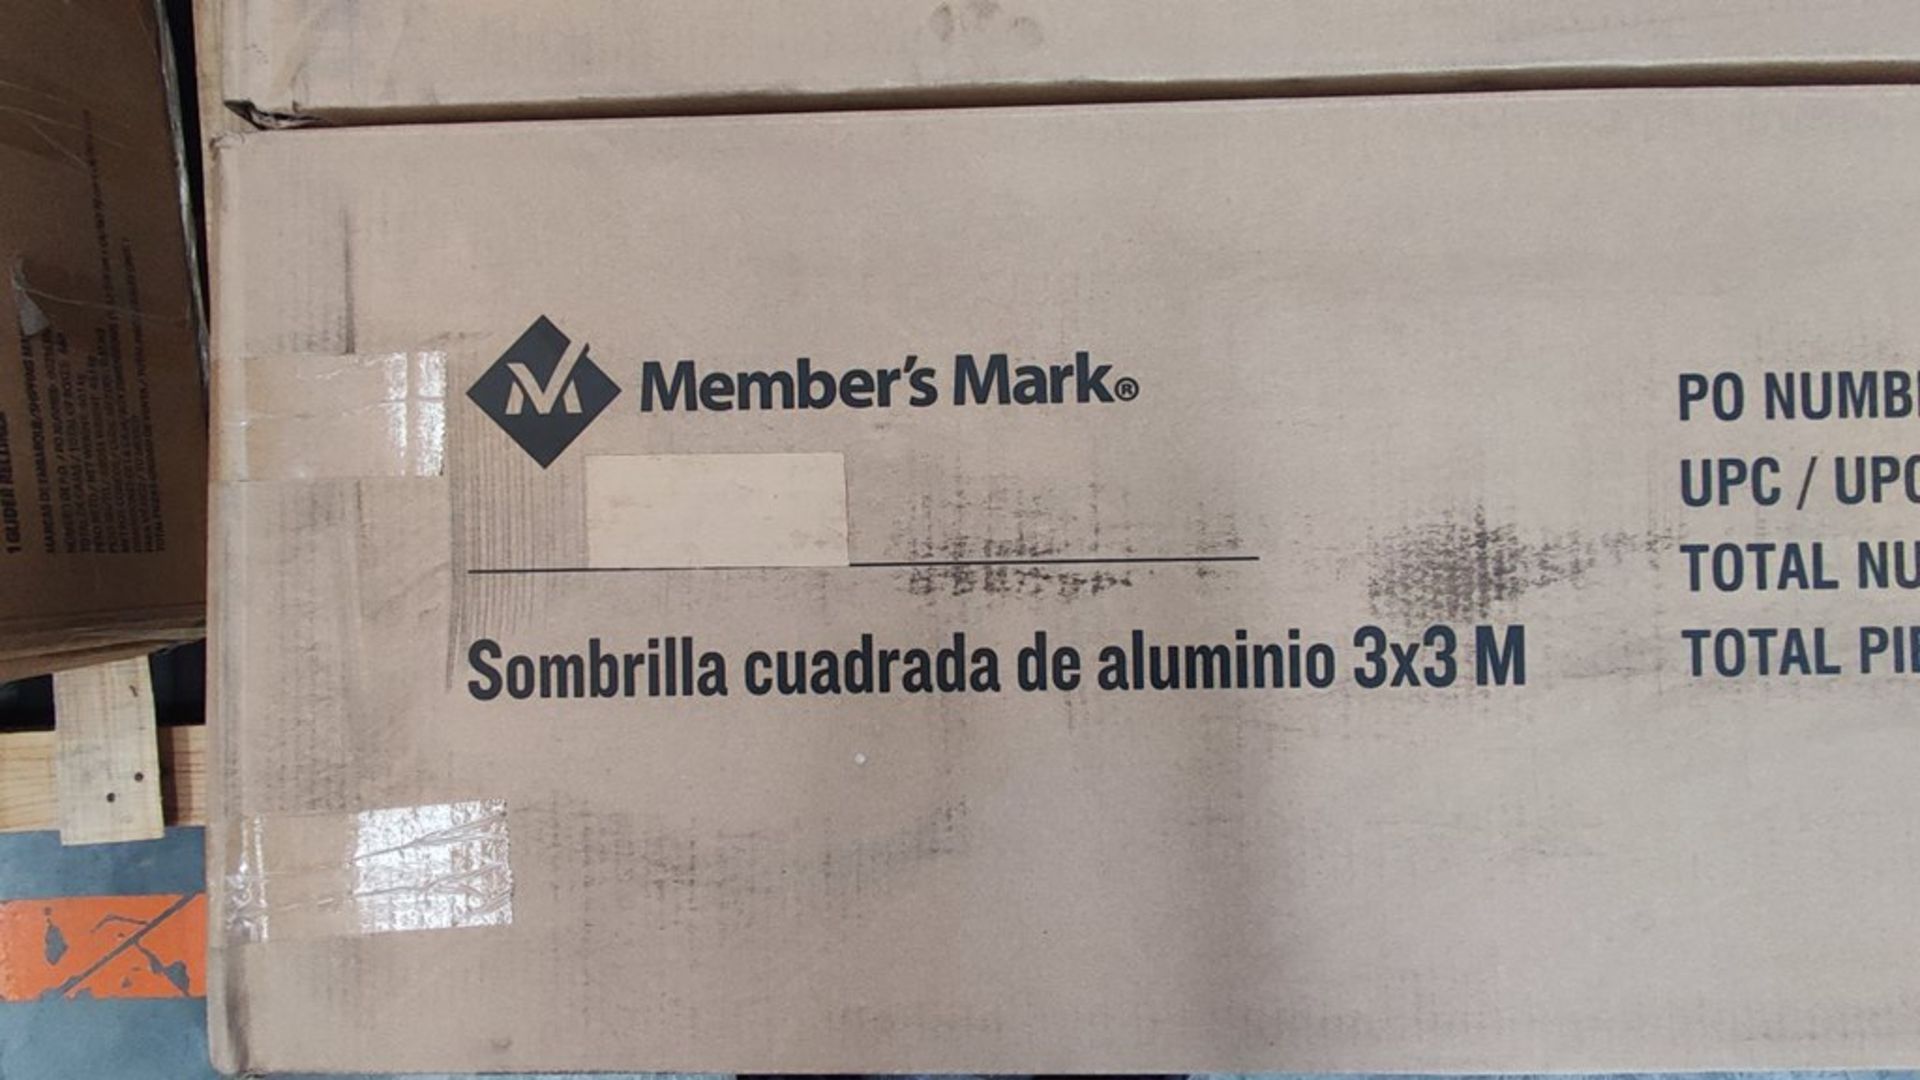 1 Sombrilla cuadrada de aluminio para exterior marca Member´s Mark, medidas 3x3 m, Favor de inspecc - Image 7 of 9